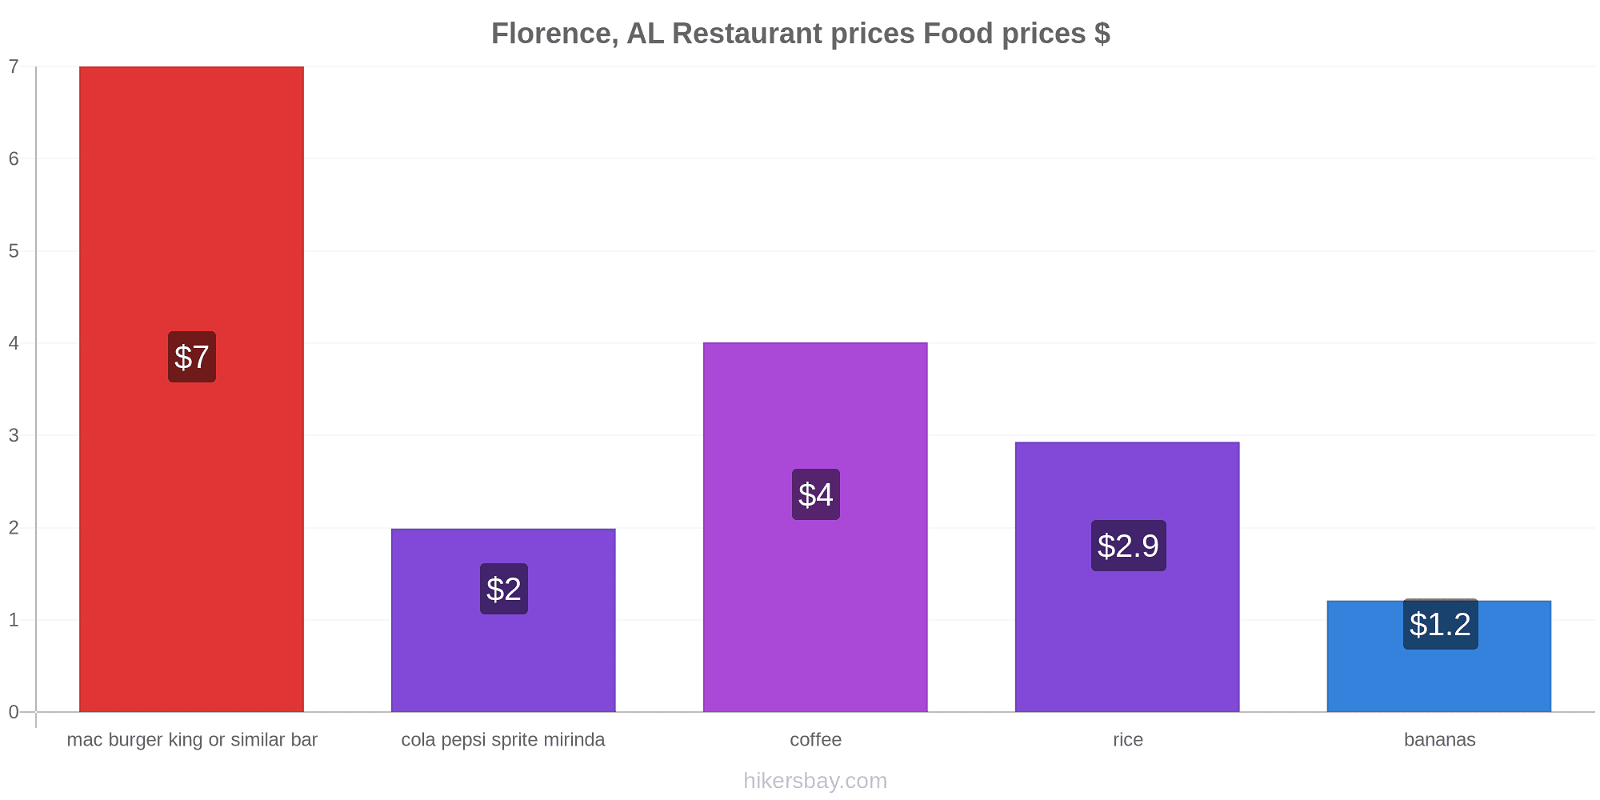 Florence, AL price changes hikersbay.com